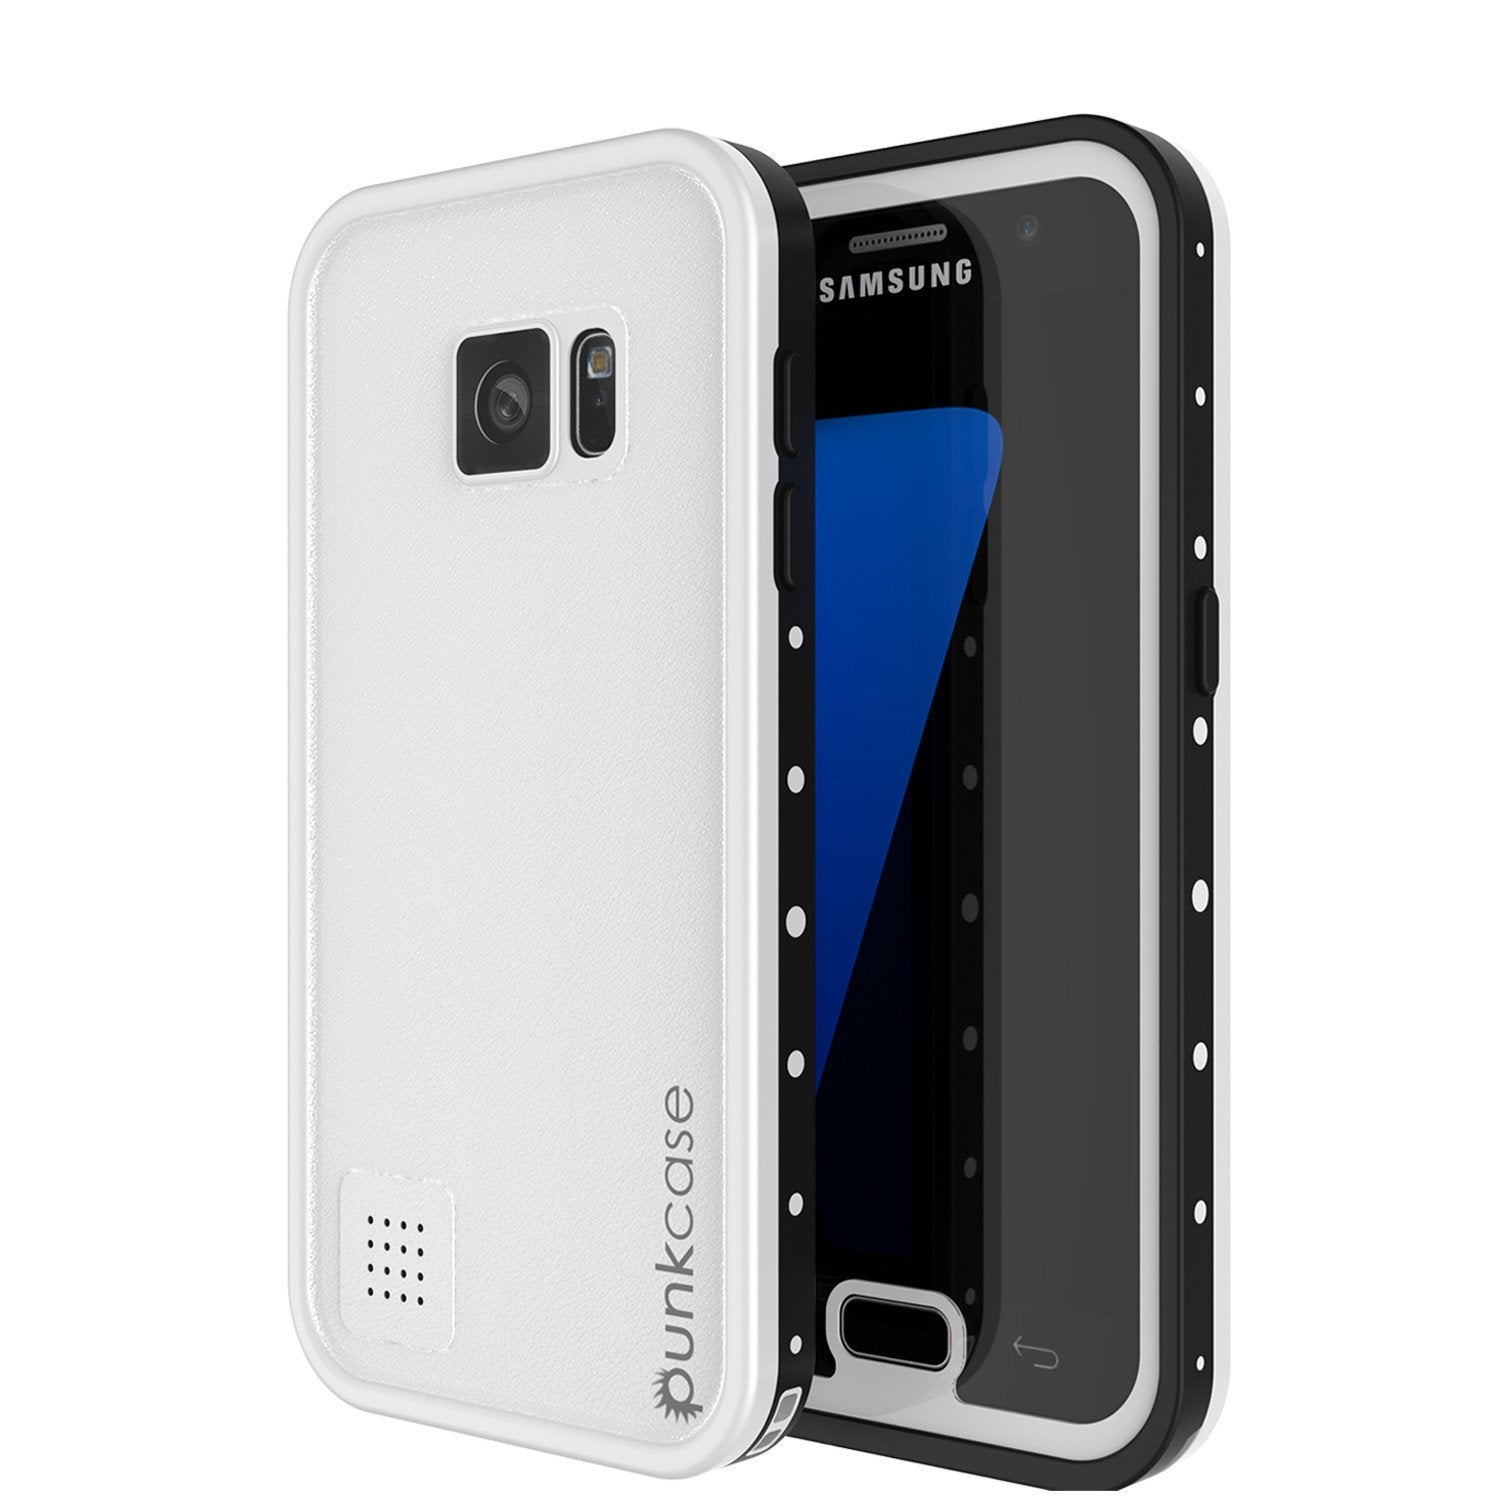 Galaxy S7 Waterproof Case, Punkcase StudStar White Thin 6.6ft Underwater IP68 Shock/Dirt/Snow Proof